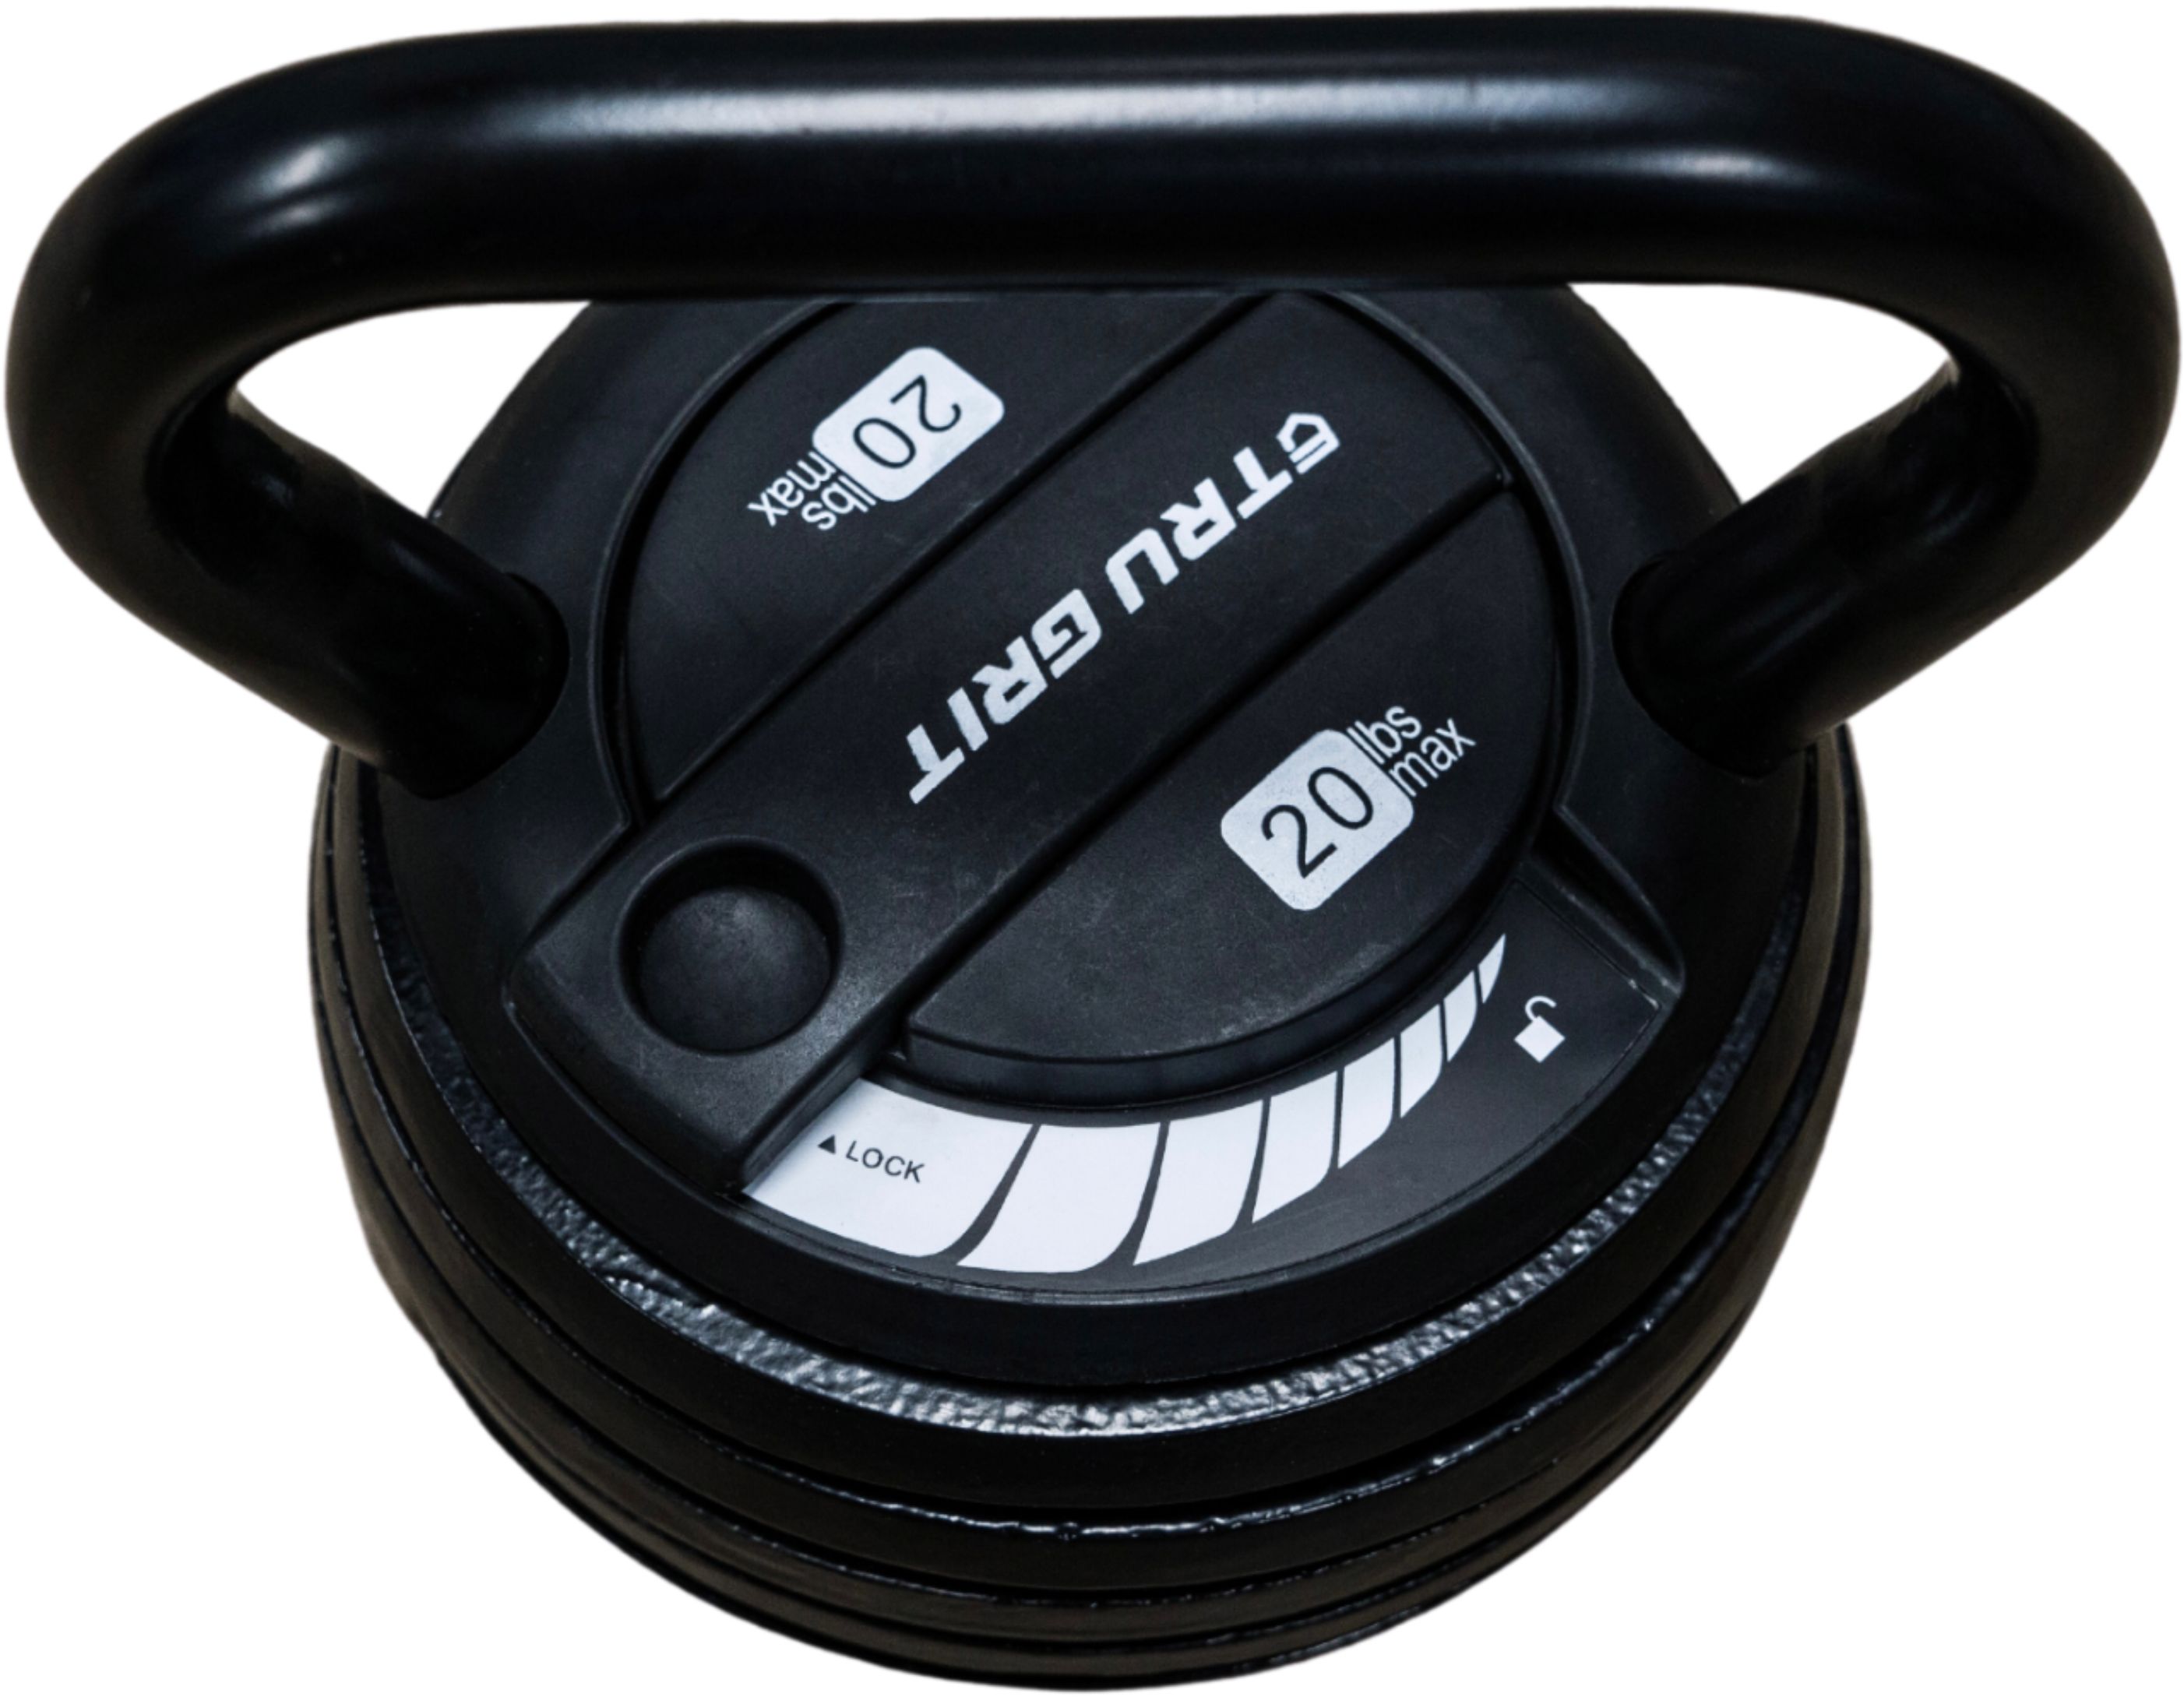 KTTL1000 Best Tru Black Adjustable Buy: 20-lb Grit Kettlebell